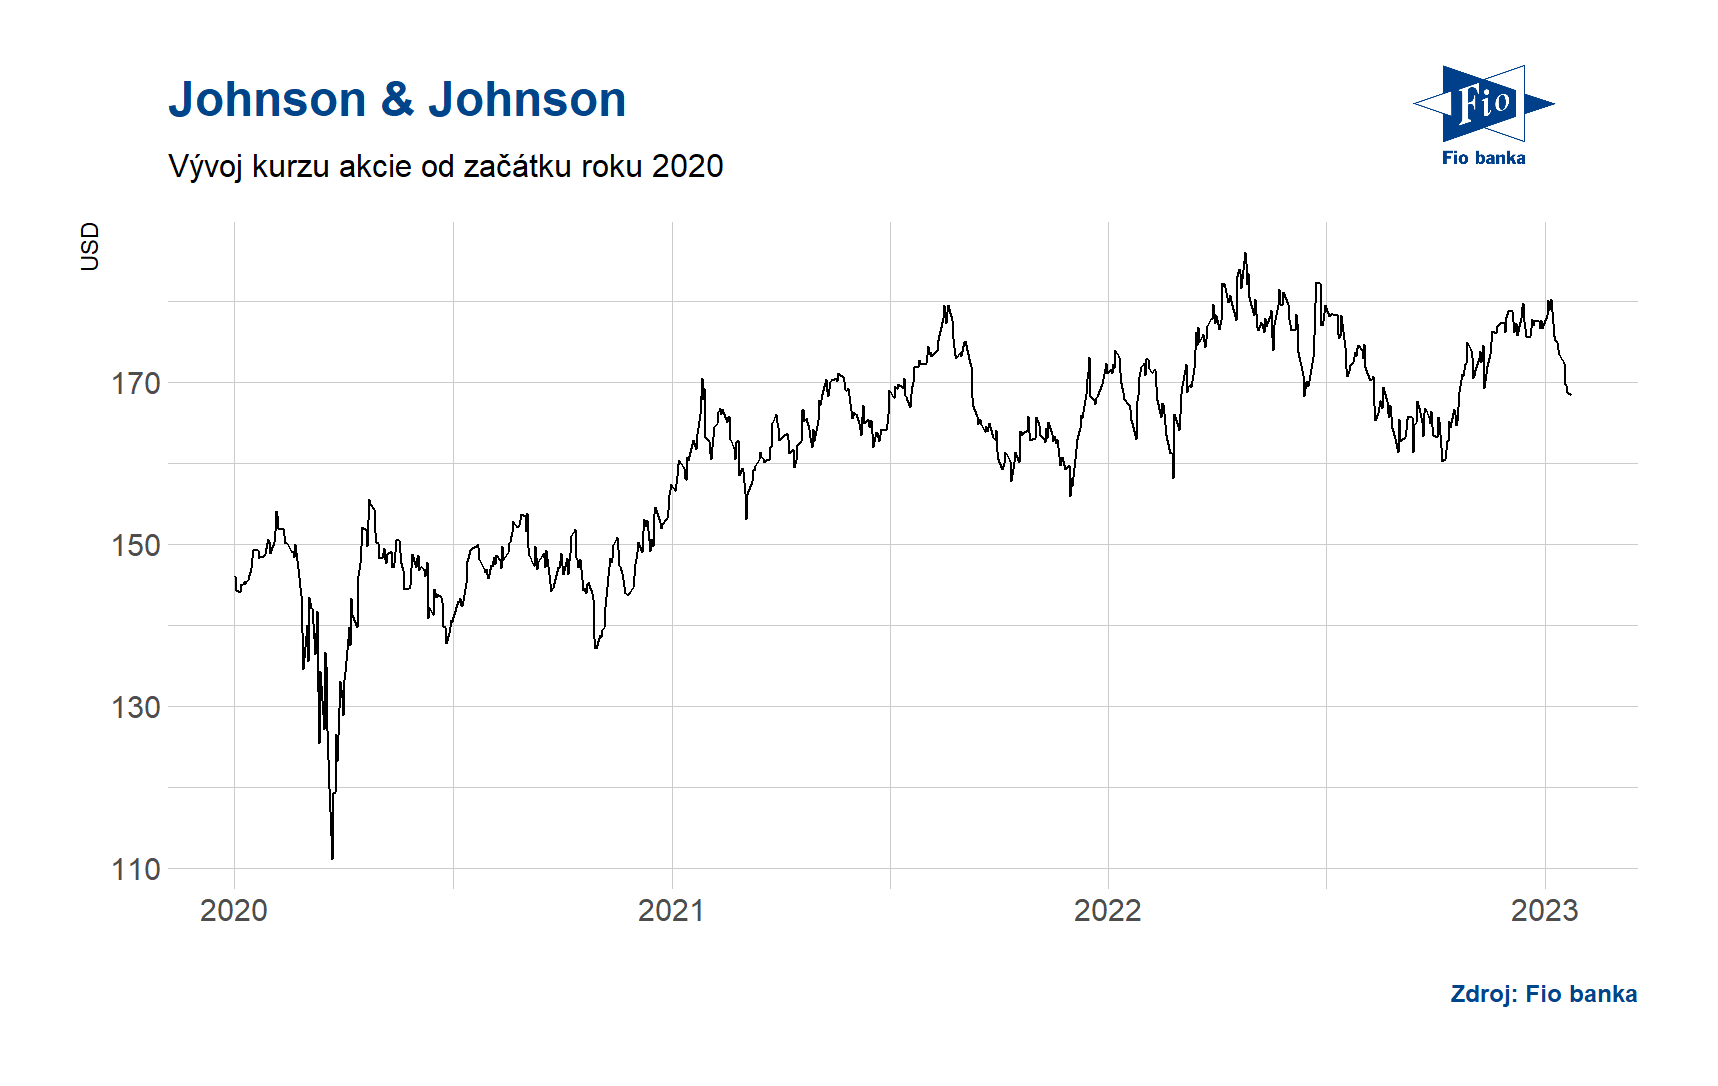 Vývoj akcií Johnson & Johnson